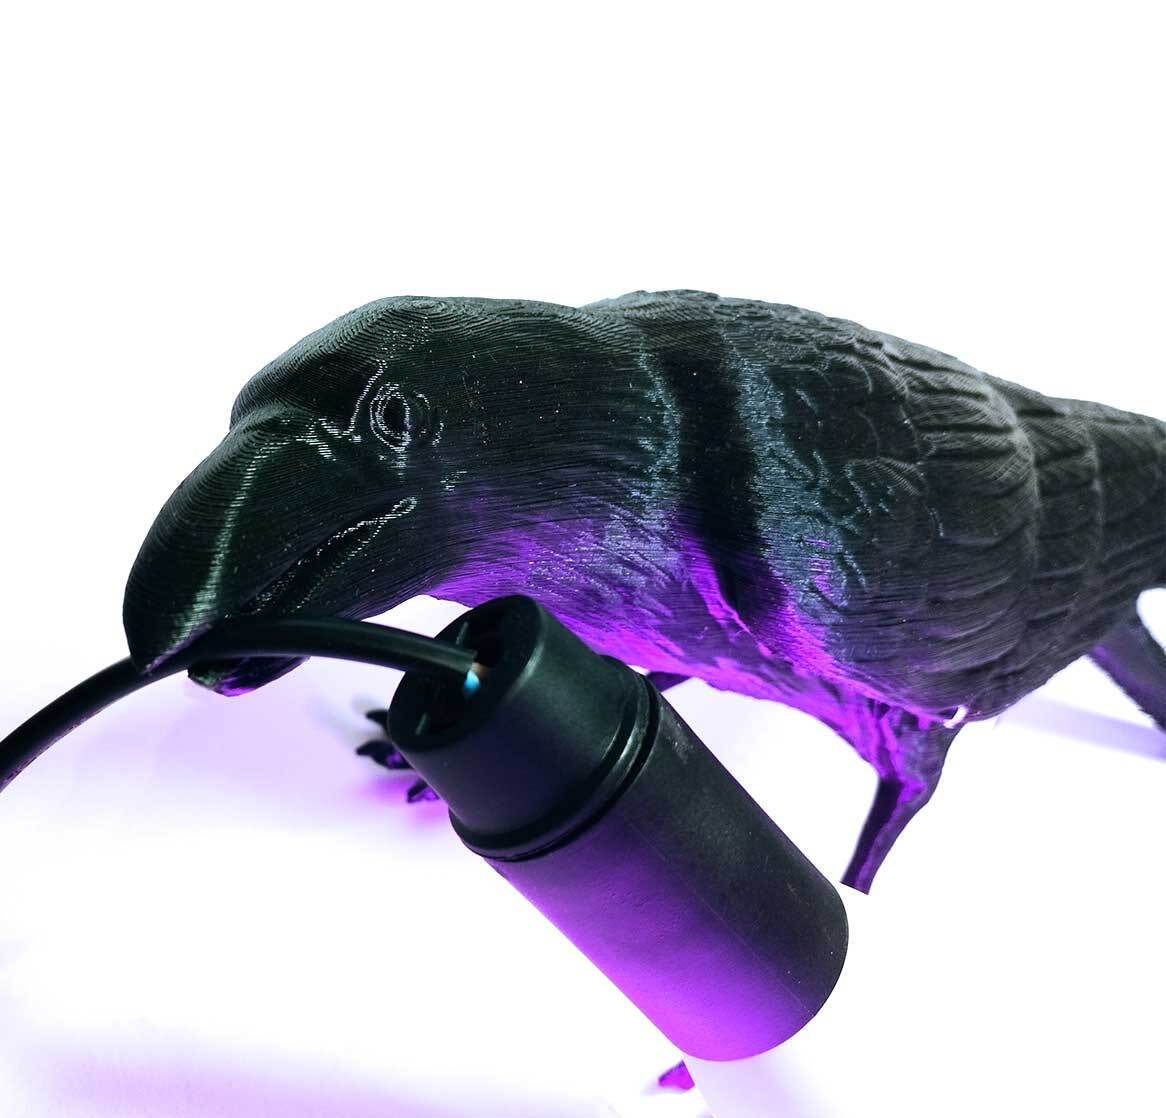 Raven Lamp